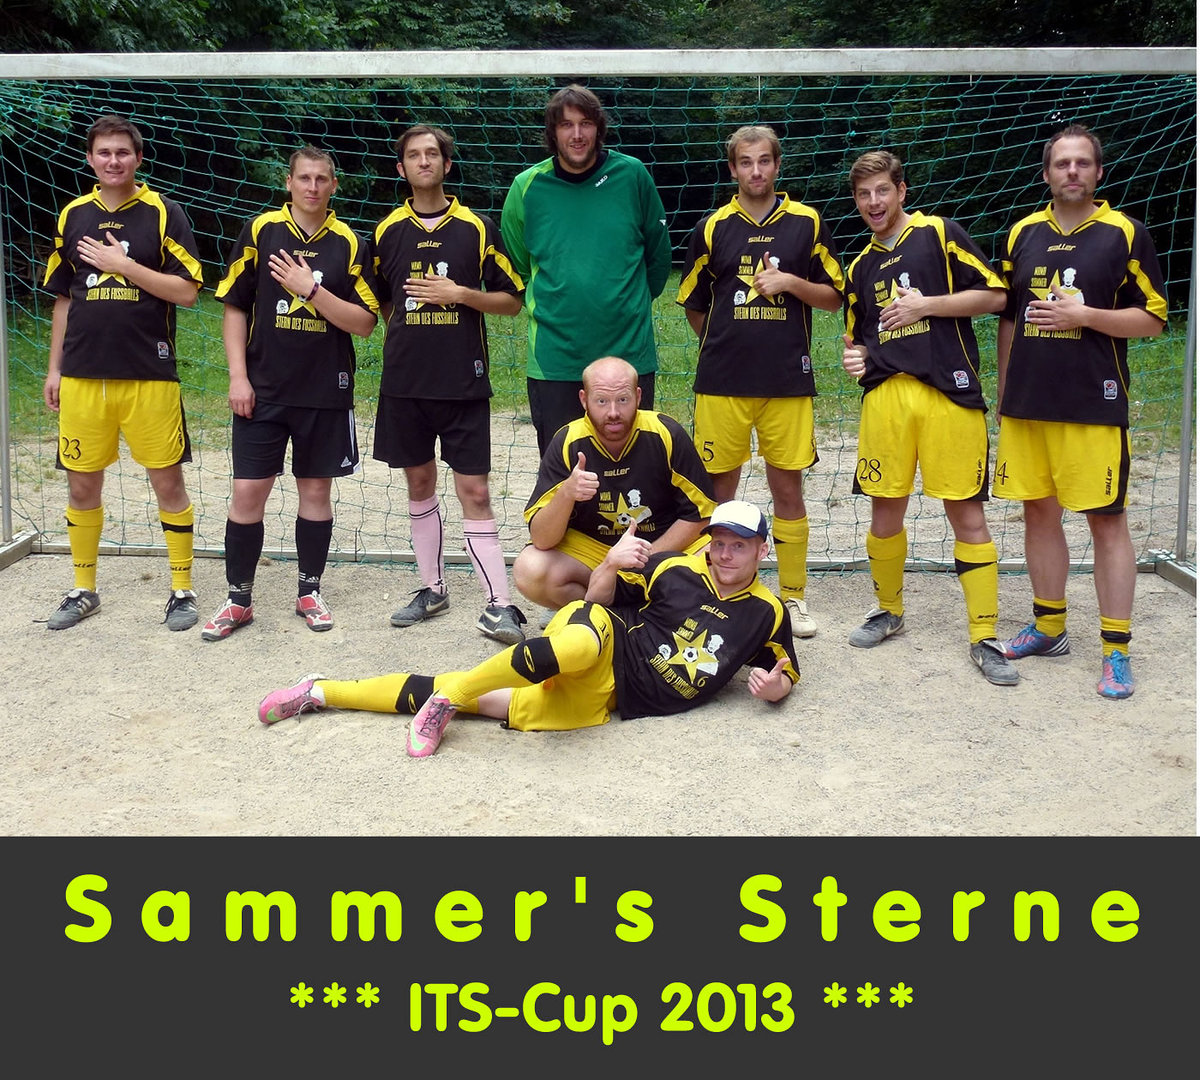 Its cup 2013   teamfotos   sammer's sterne retina